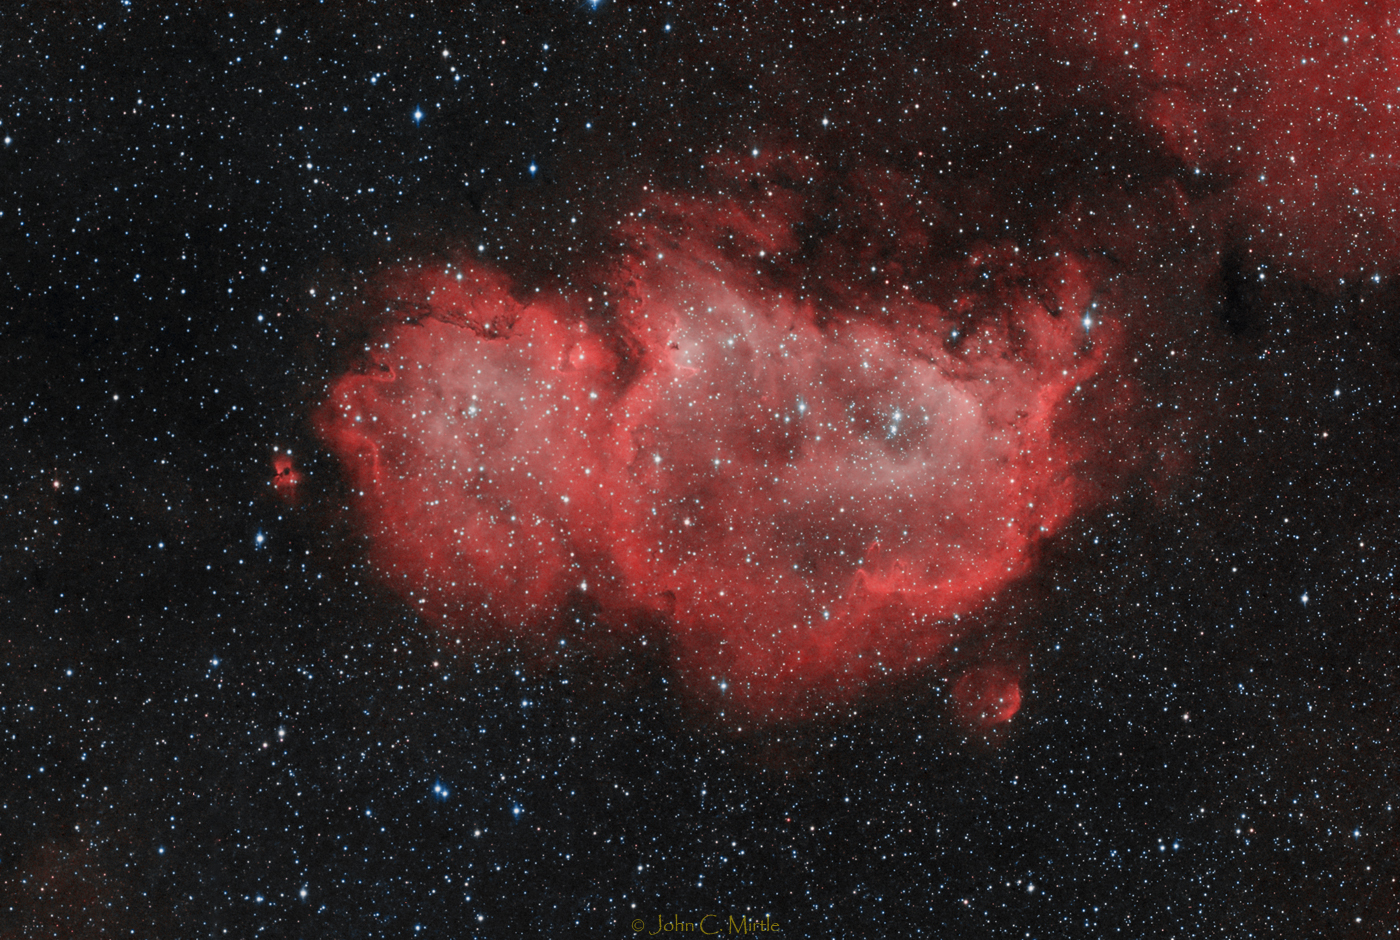 Emission Nebula in Cassiopeia